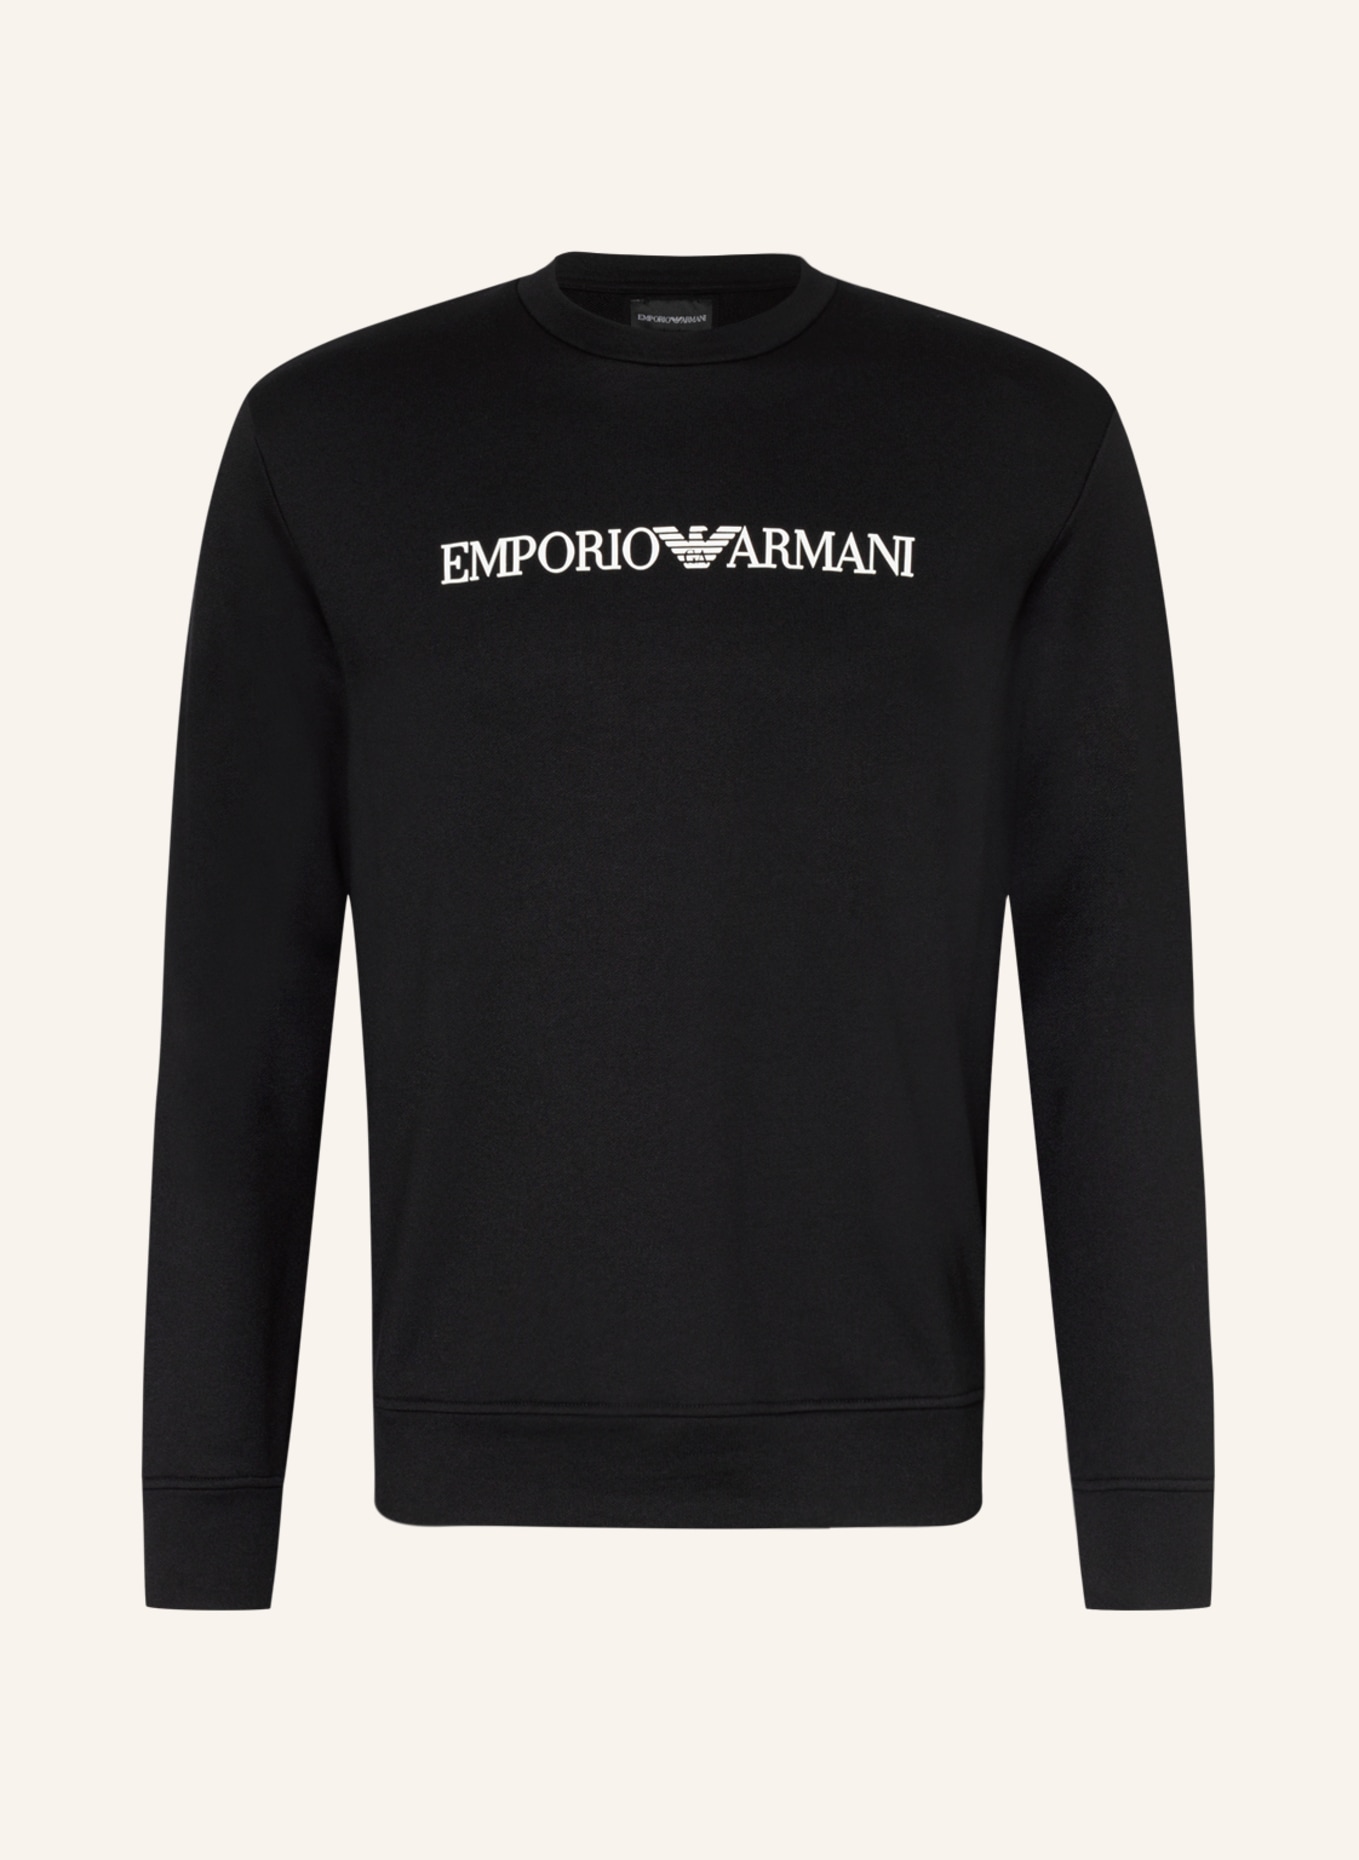 EMPORIO ARMANI Sweatshirt , Farbe: SCHWARZ (Bild 1)